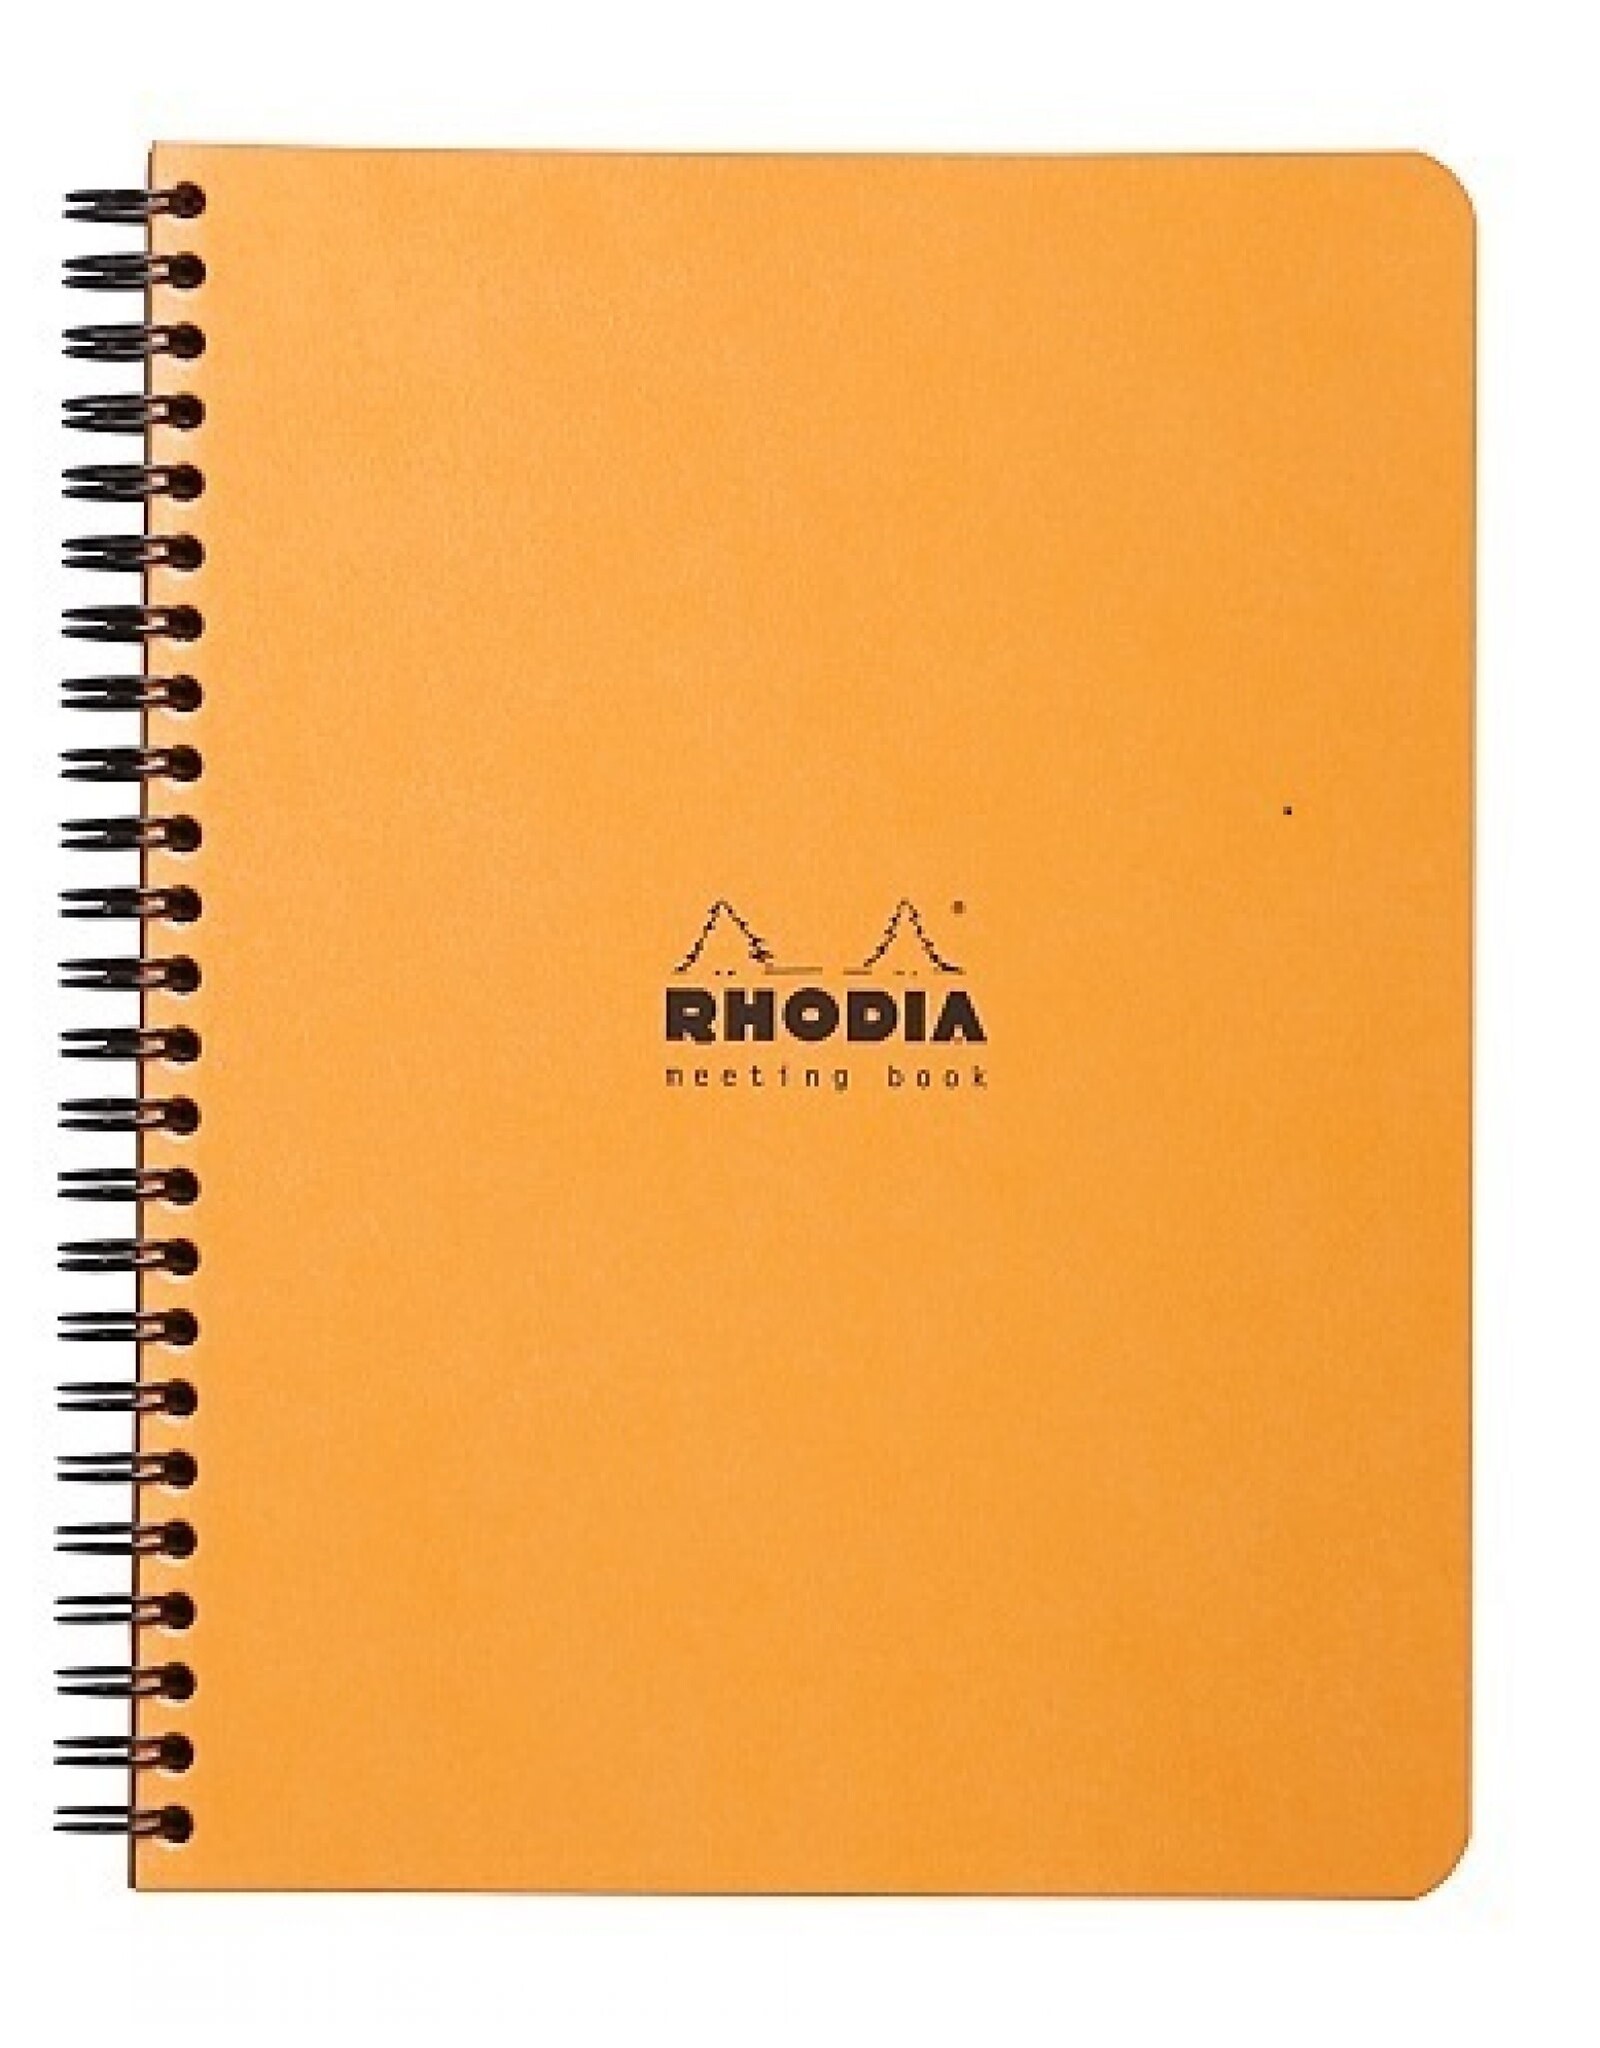 Rhodia Rhodia Meeting Book 80g paper, 80 Lined Sheets, 6 1/2" x 8 1/4", Orange